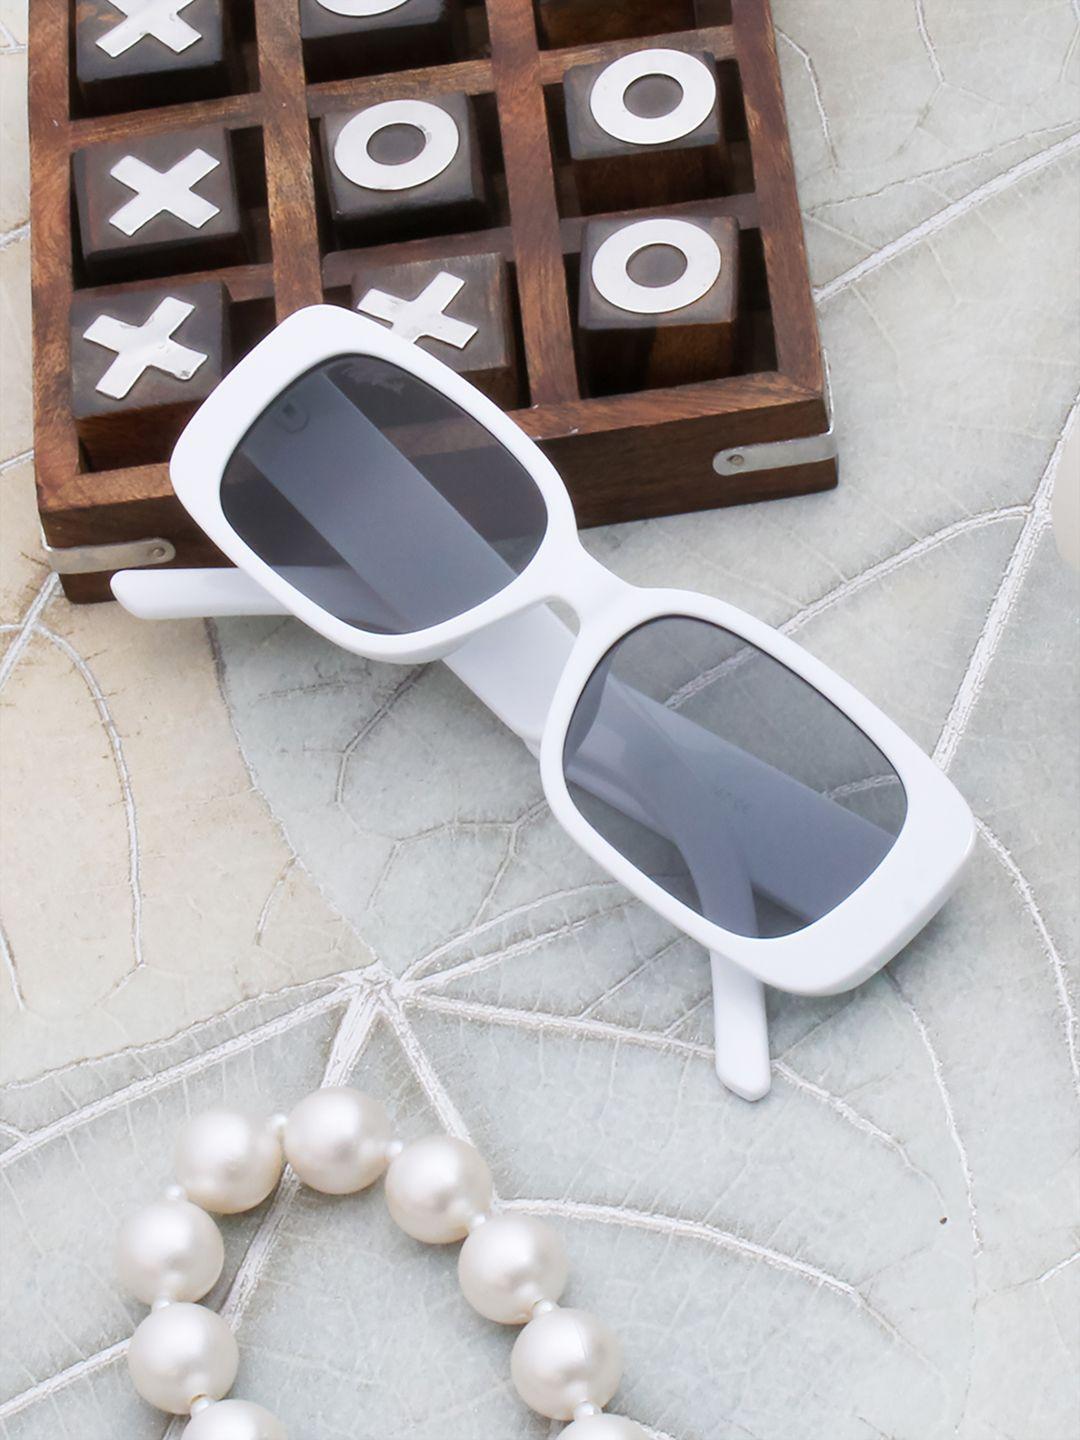 gold berg unisex black lens & white square sunglasses with uv protected lens